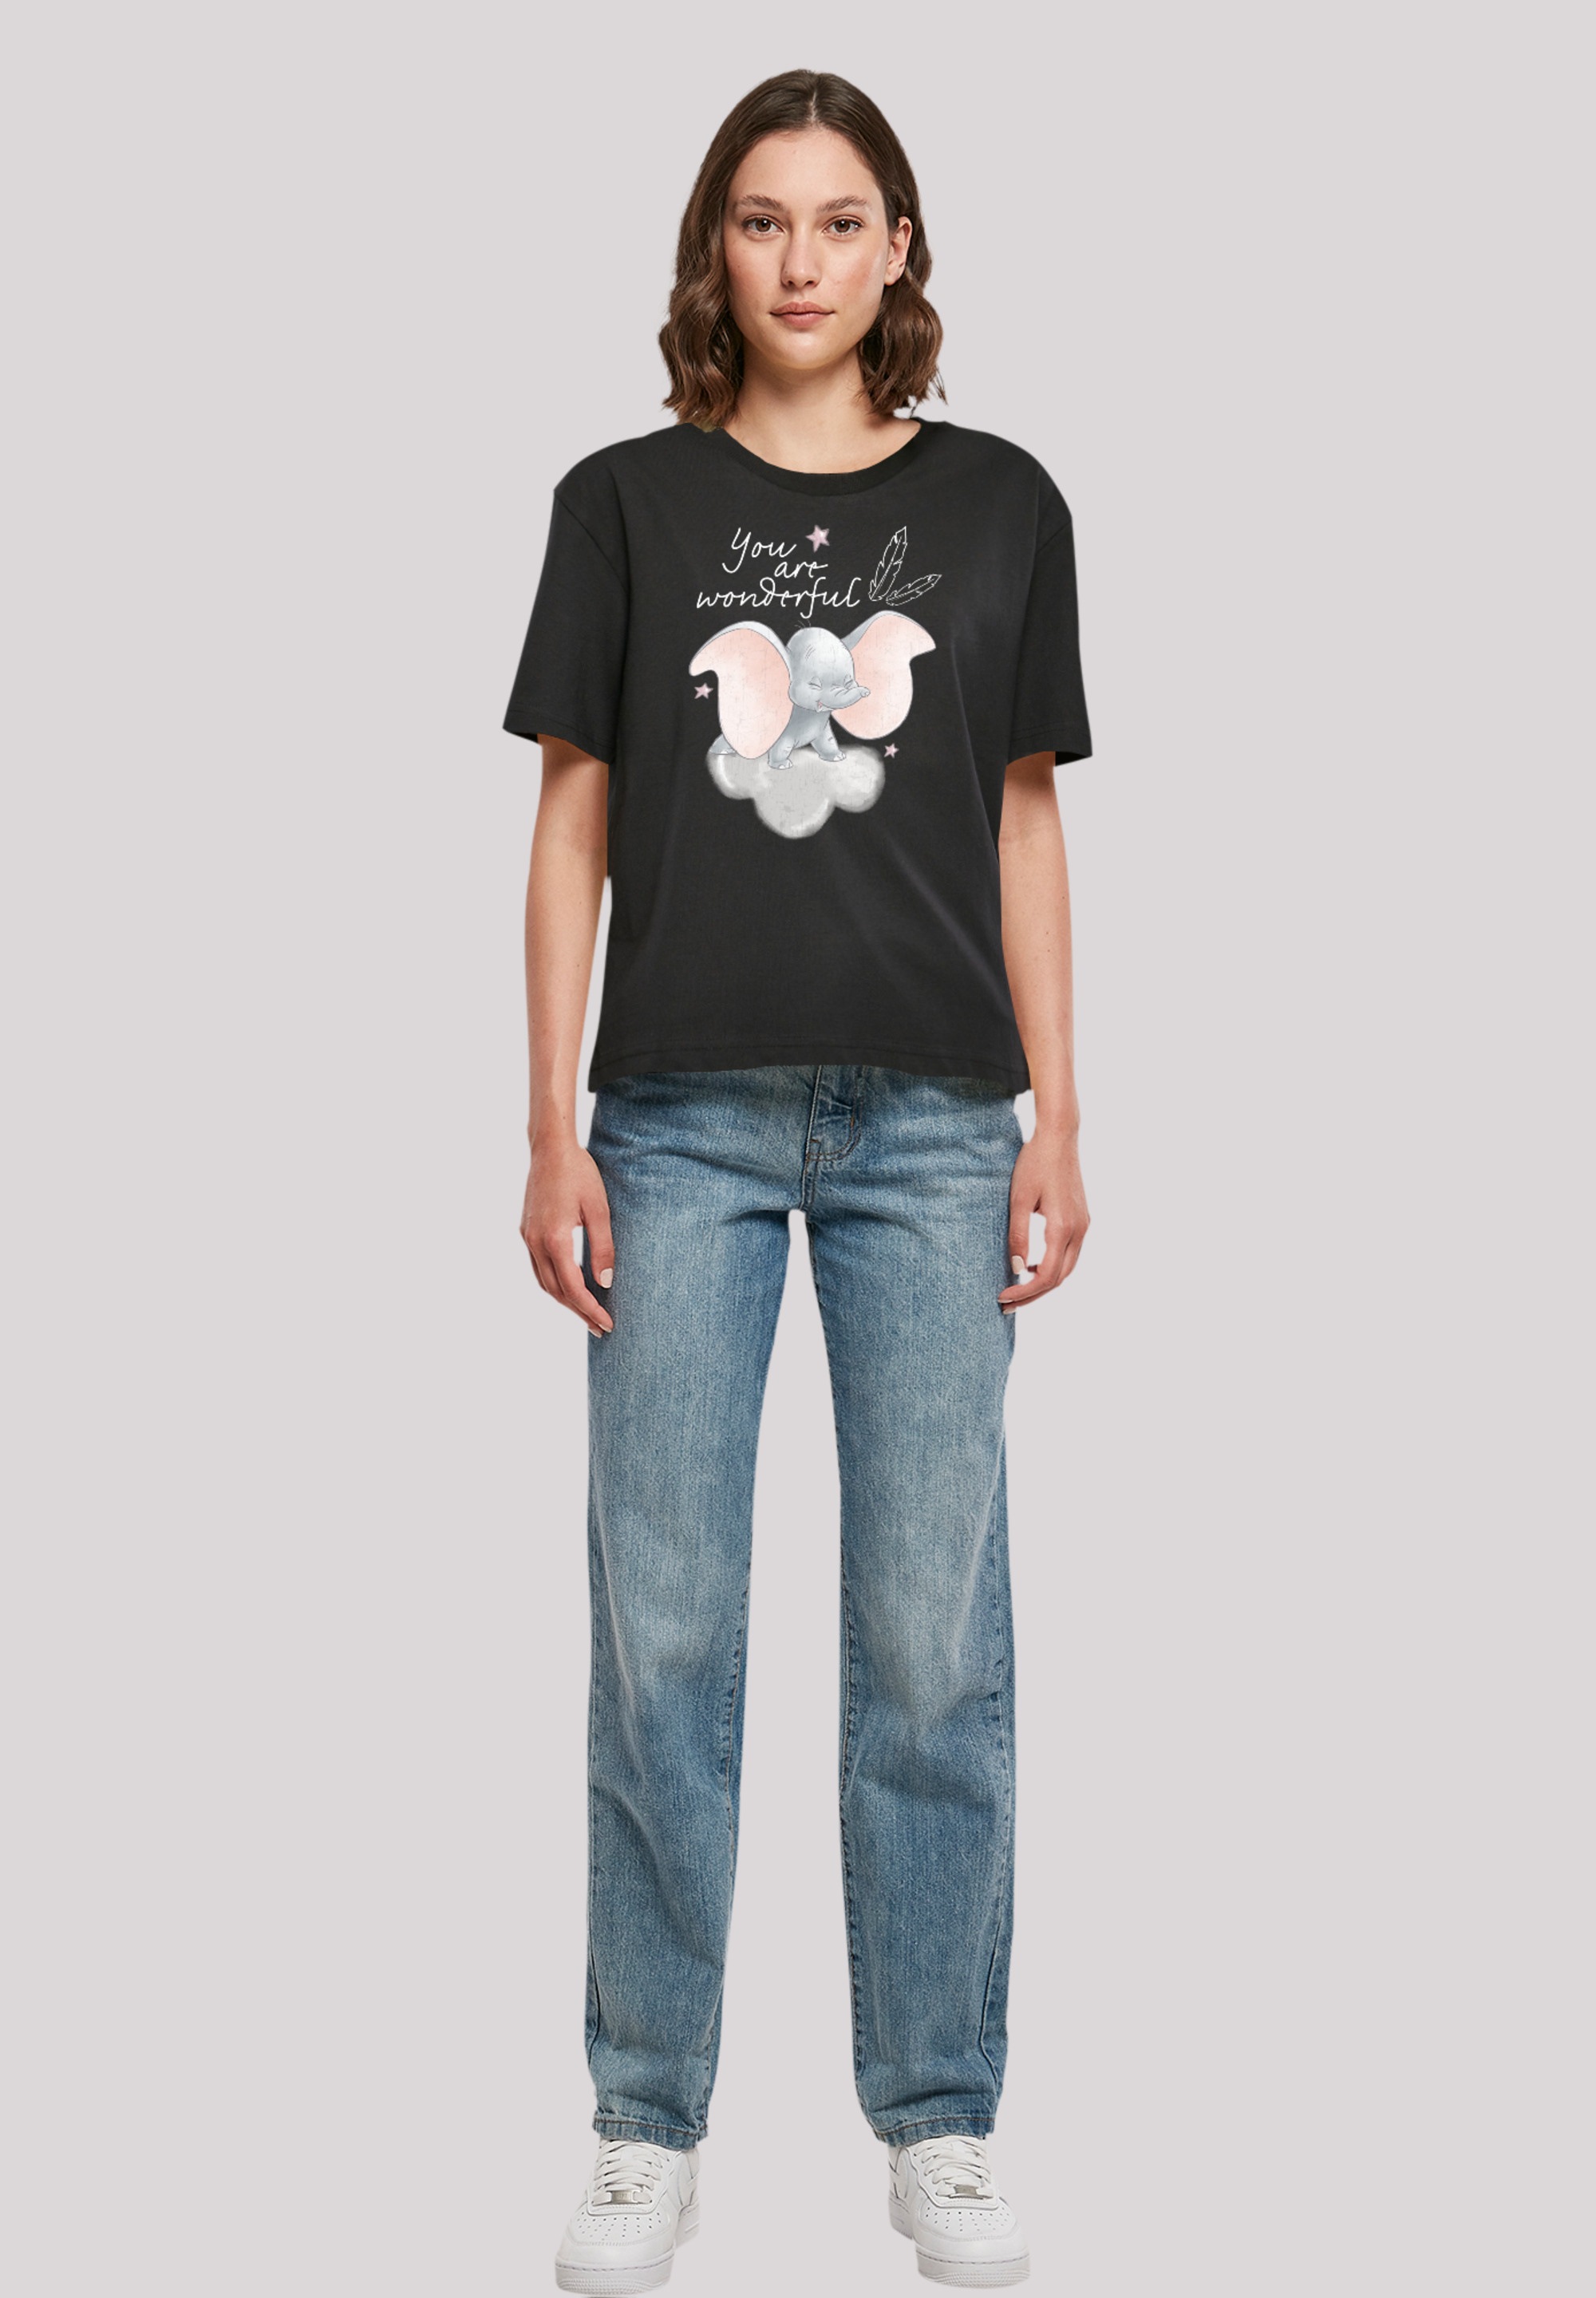 Qualität | BAUR You Wonderful«, Are F4NT4STIC Premium bestellen »Disney T-Shirt Dumbo